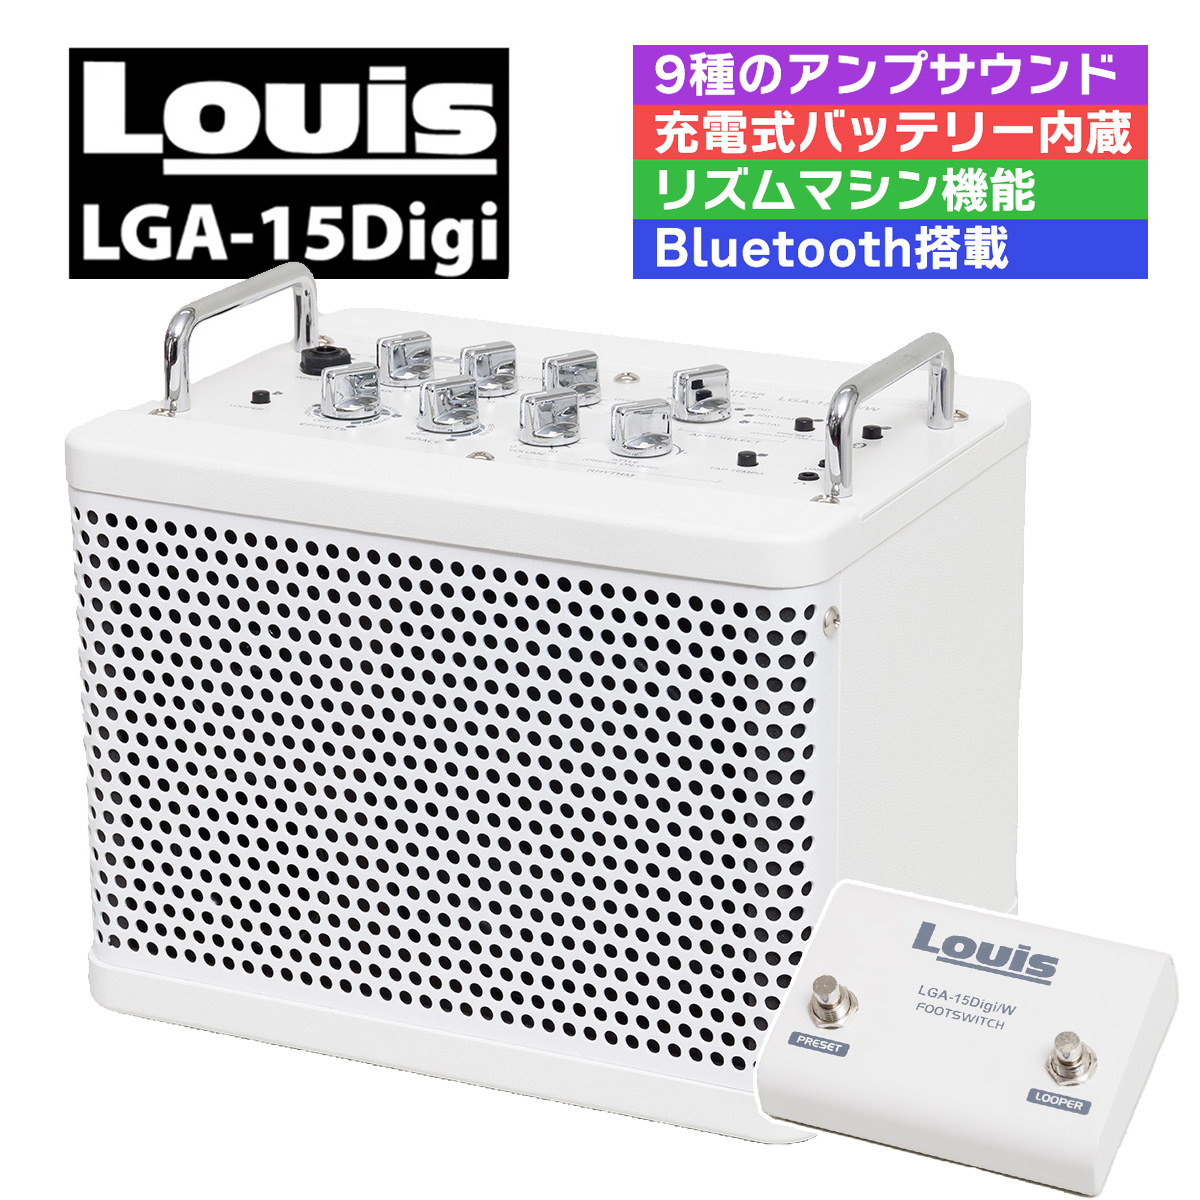 Louis LGA-15Digi/W ギターアンプ ホワイト 白 Bluetooth・リズムマシーン・ルーパー搭載 充電バッテリー内蔵 エレキギター  エレアコ対応 ルイス 【 あべのａｎｄ店 】